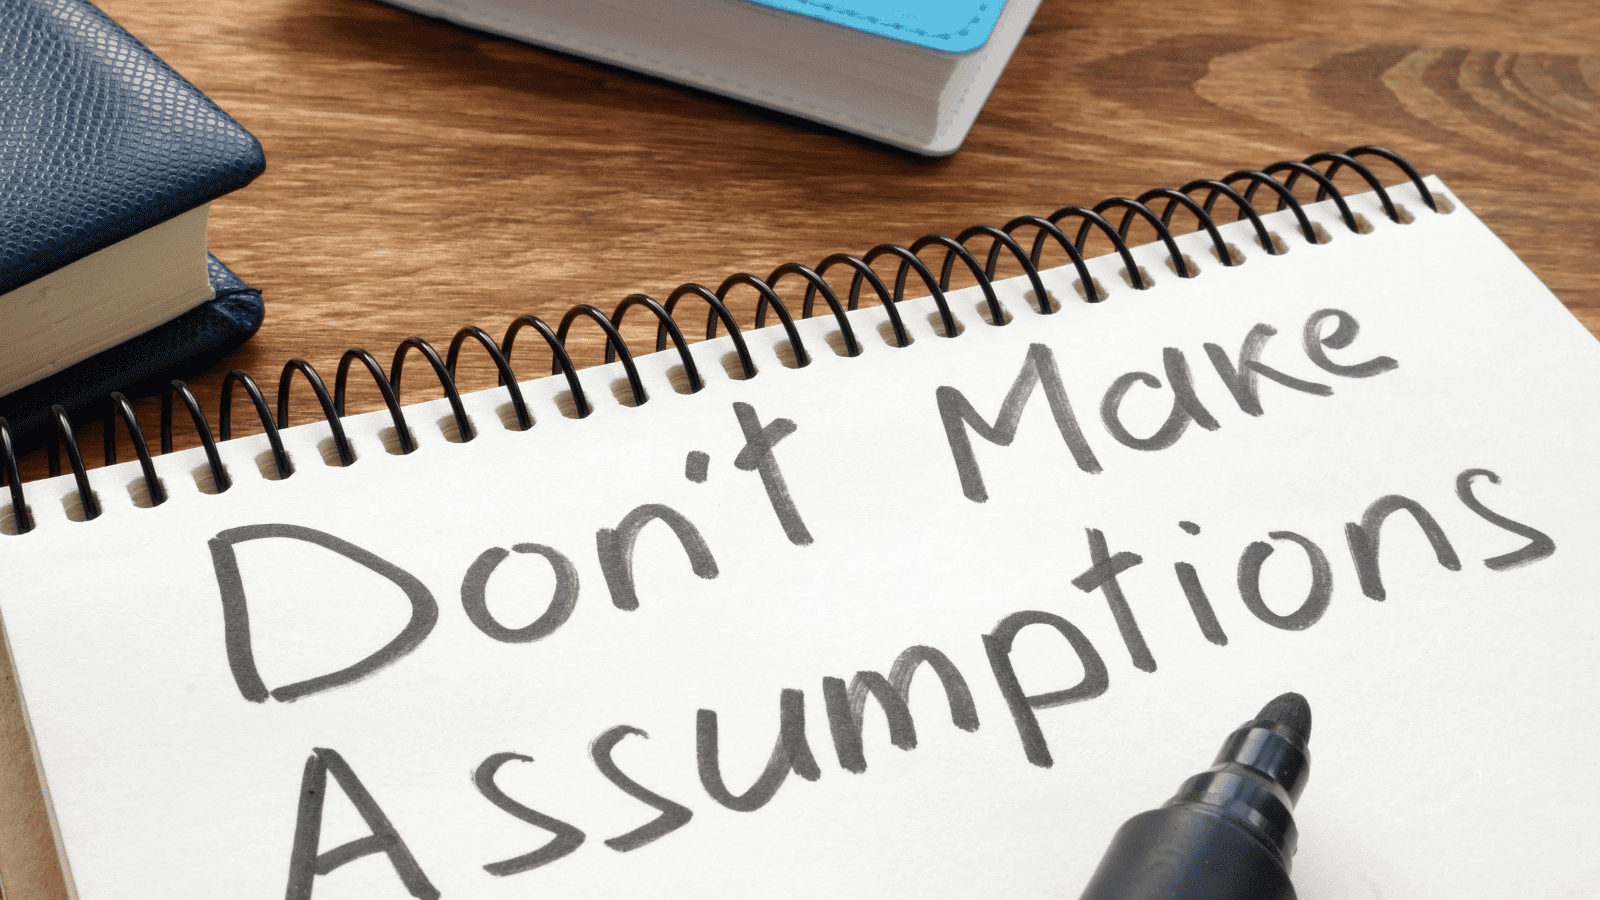 making assumptions